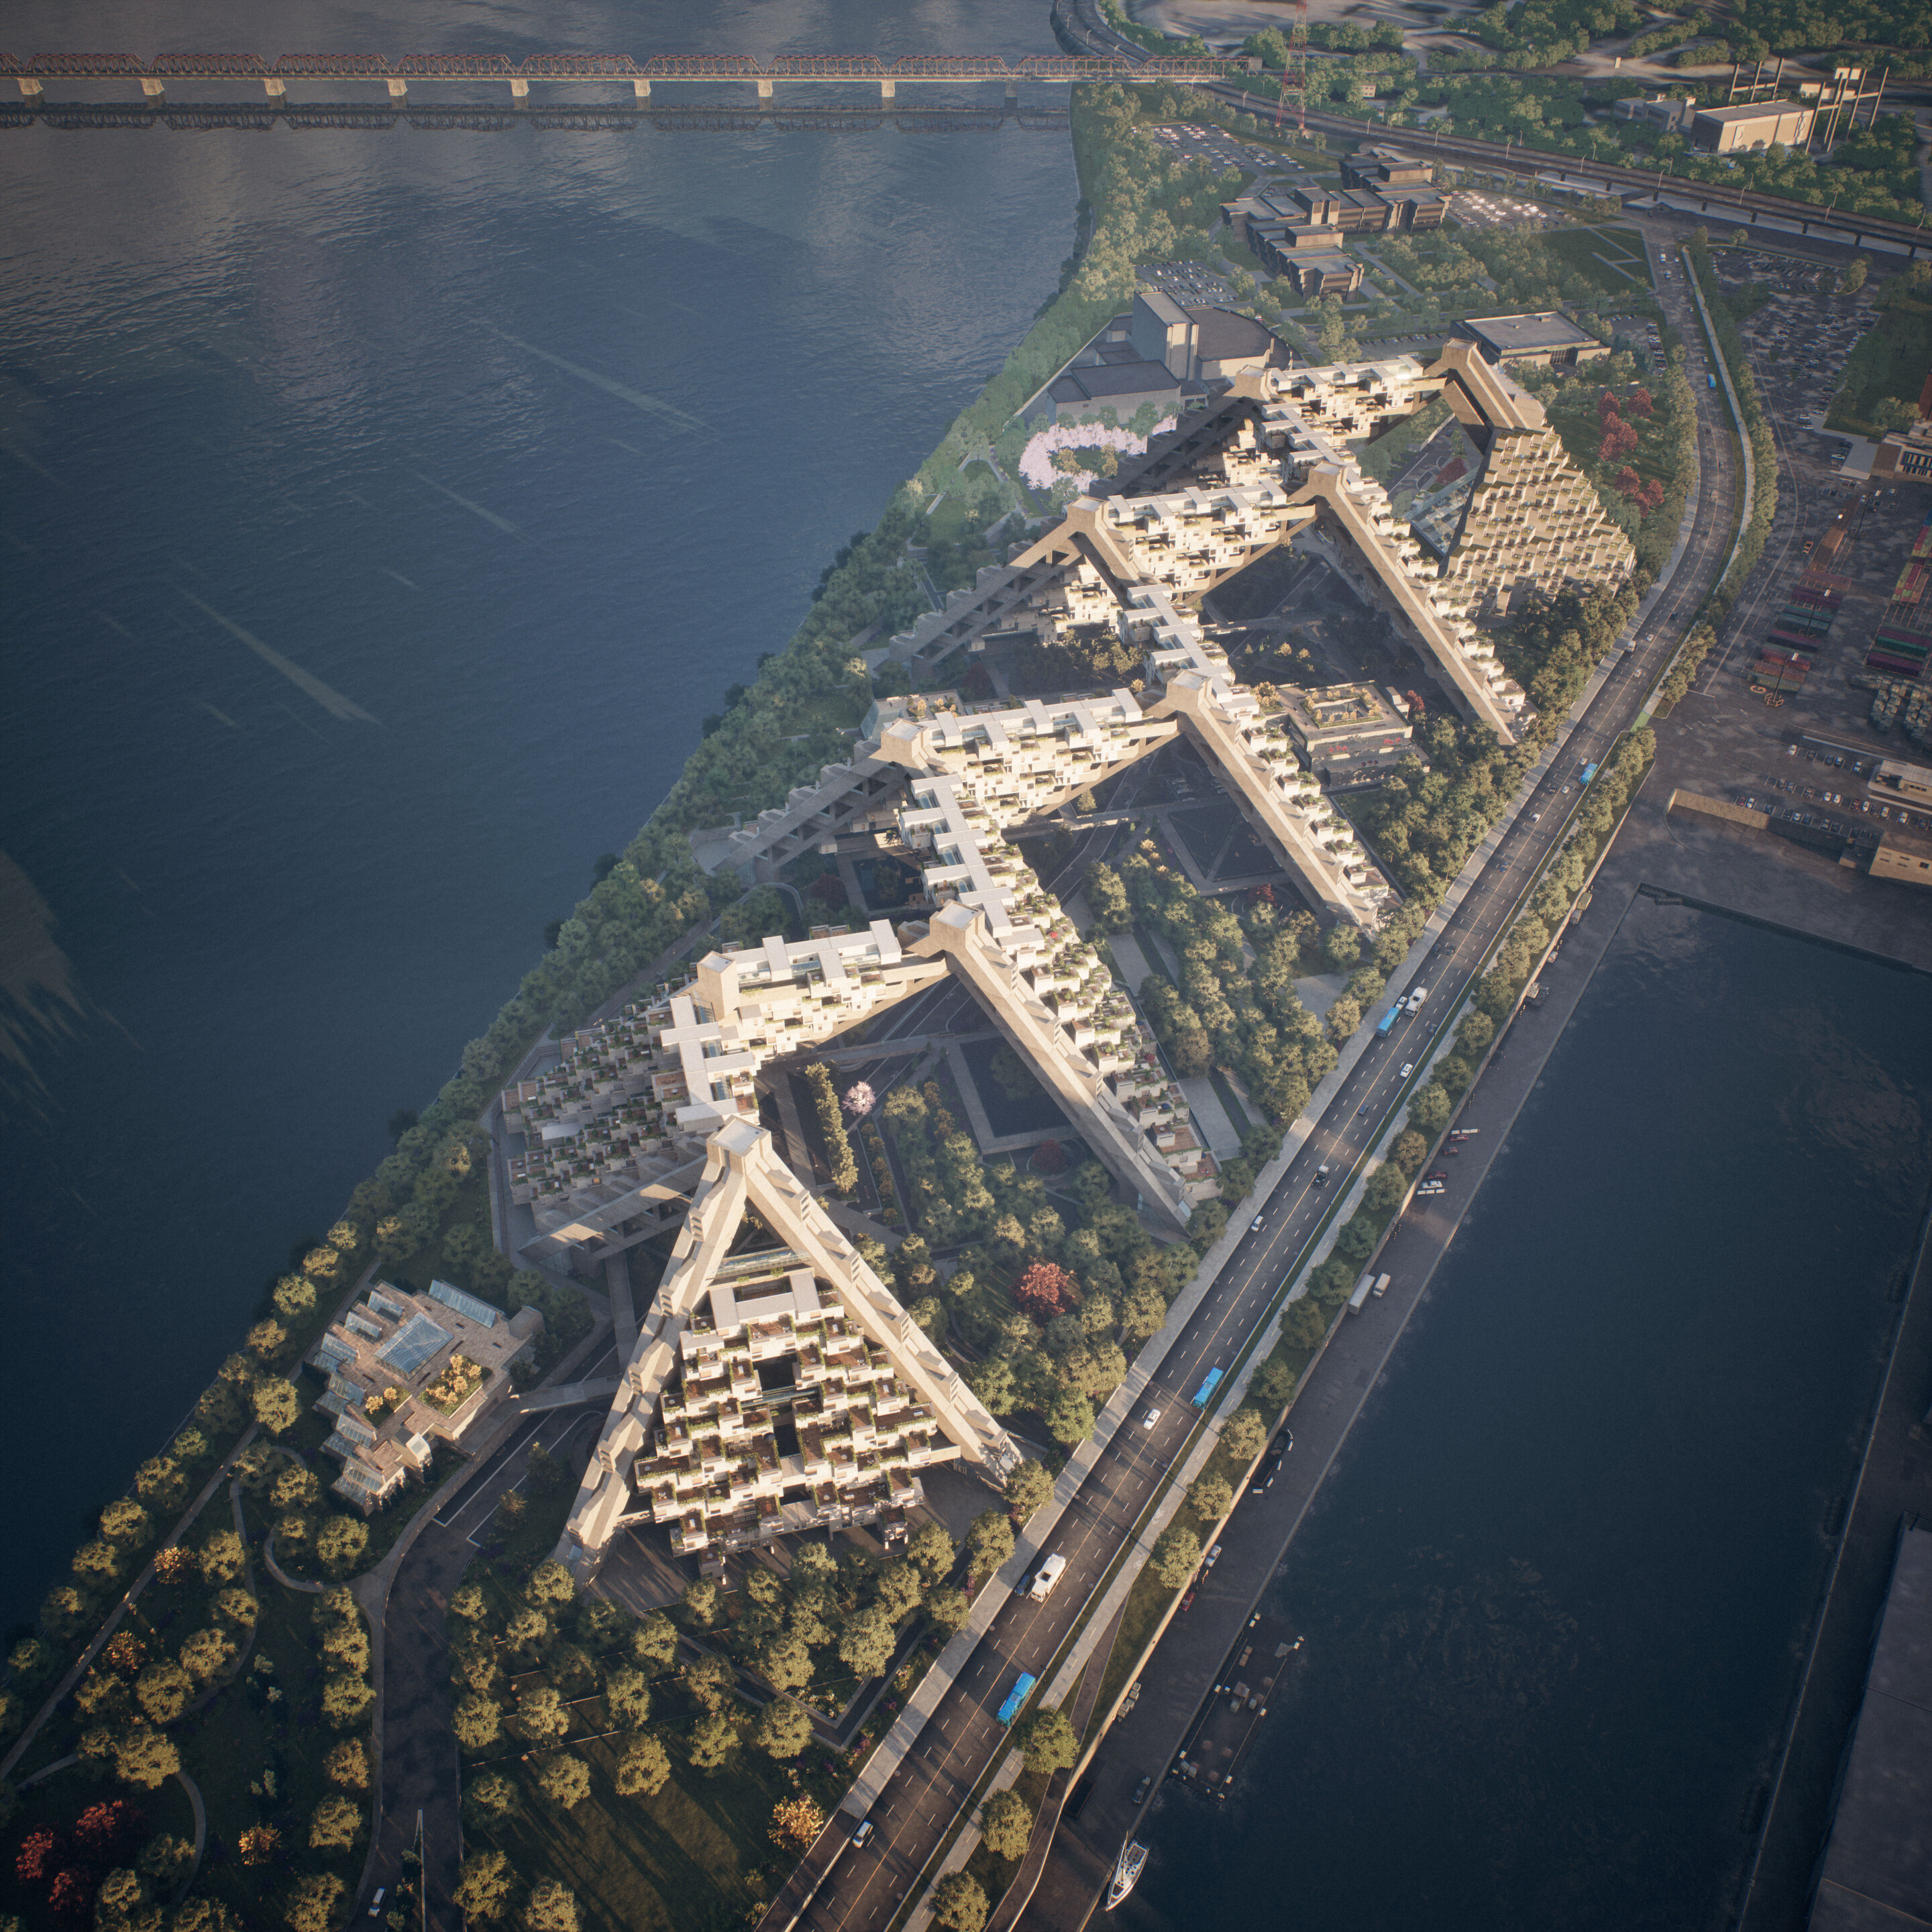 Digital model of a housing complex, birds eye view